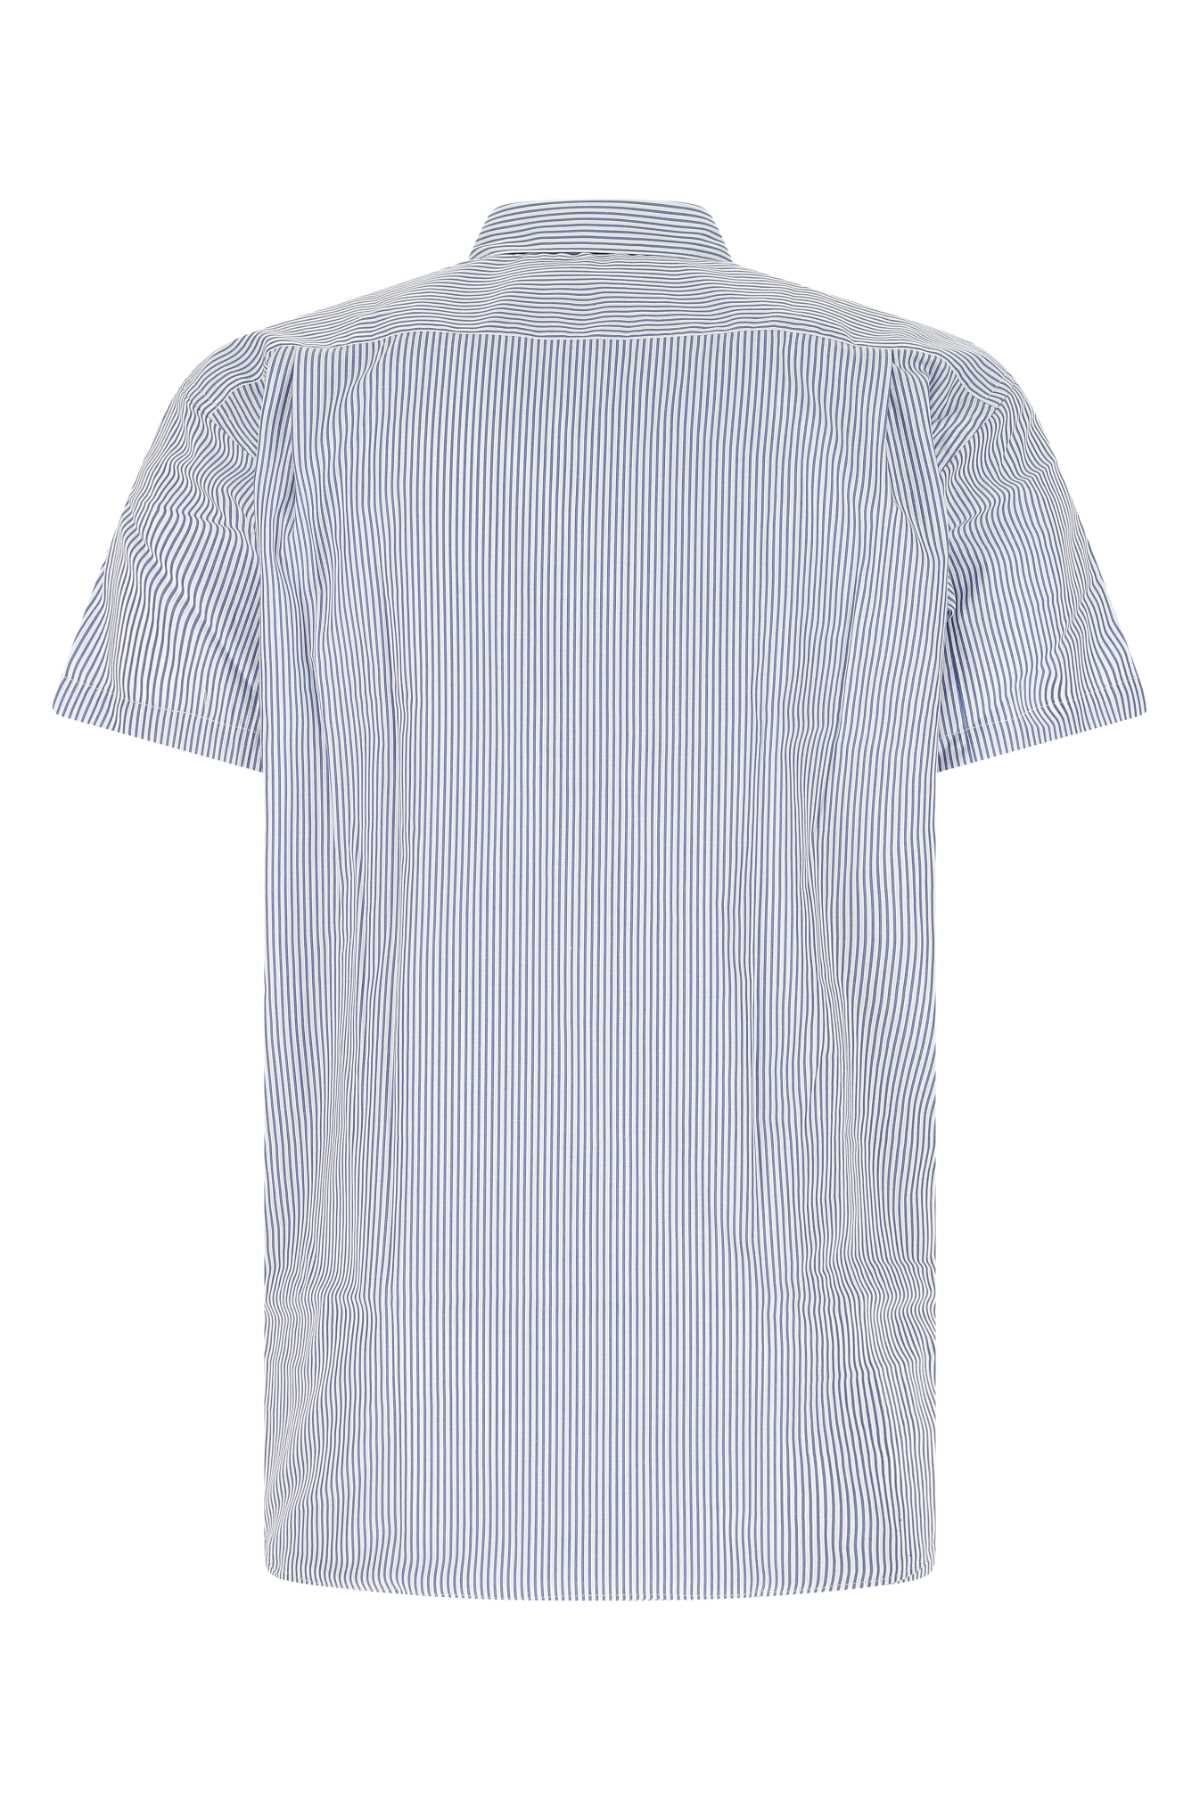 Comme Des Garçons Shirt Embroidered Cotton Shirt In Bluestripes